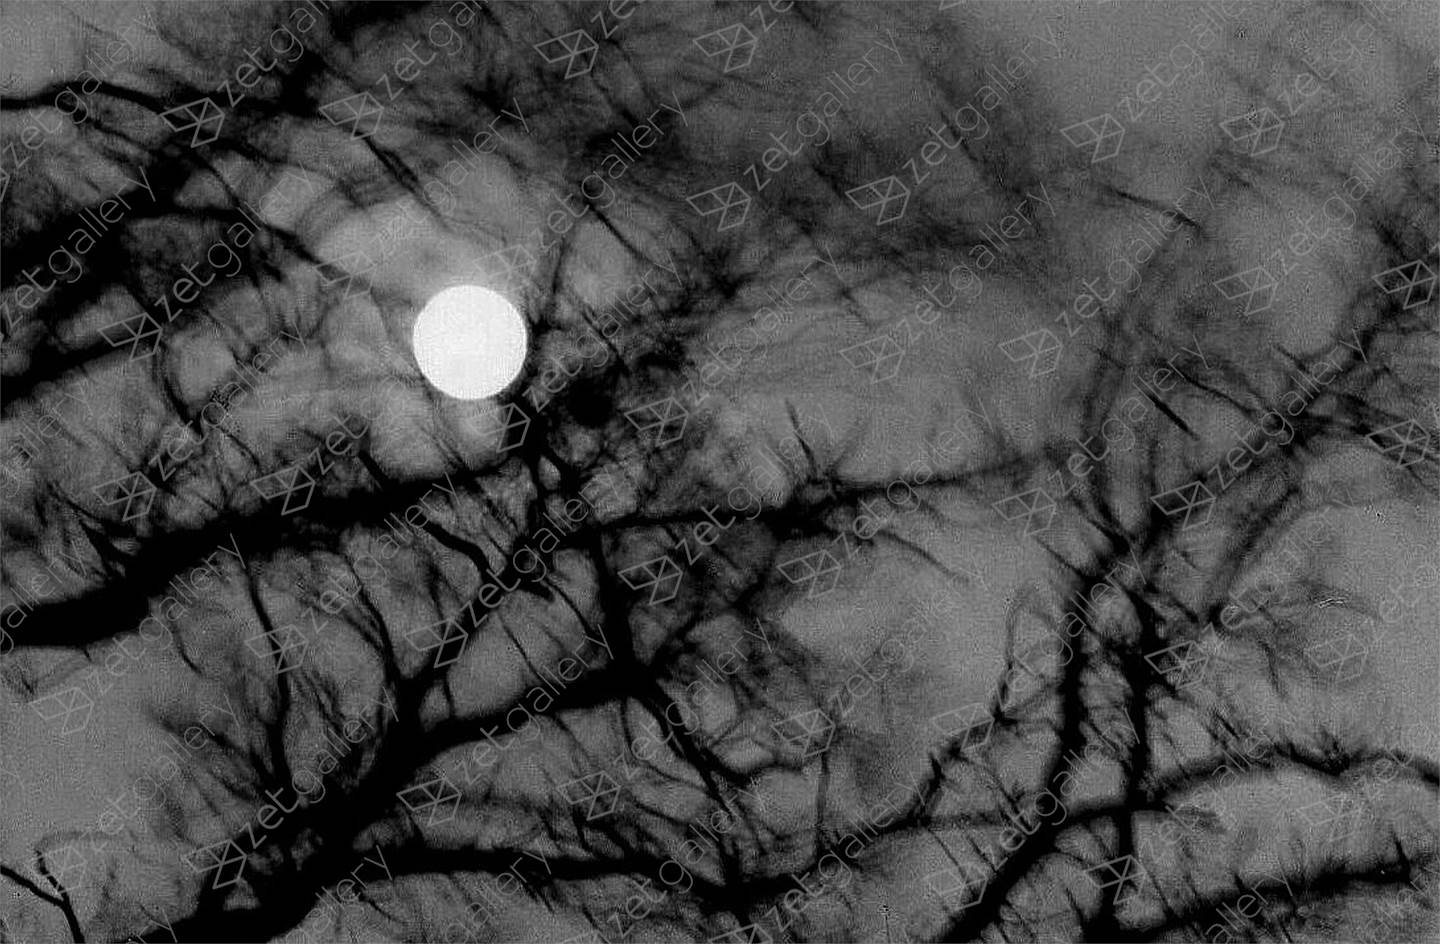 Full-Moon-Night, original B&N Cosa análoga Fotografía de Heinz Baade